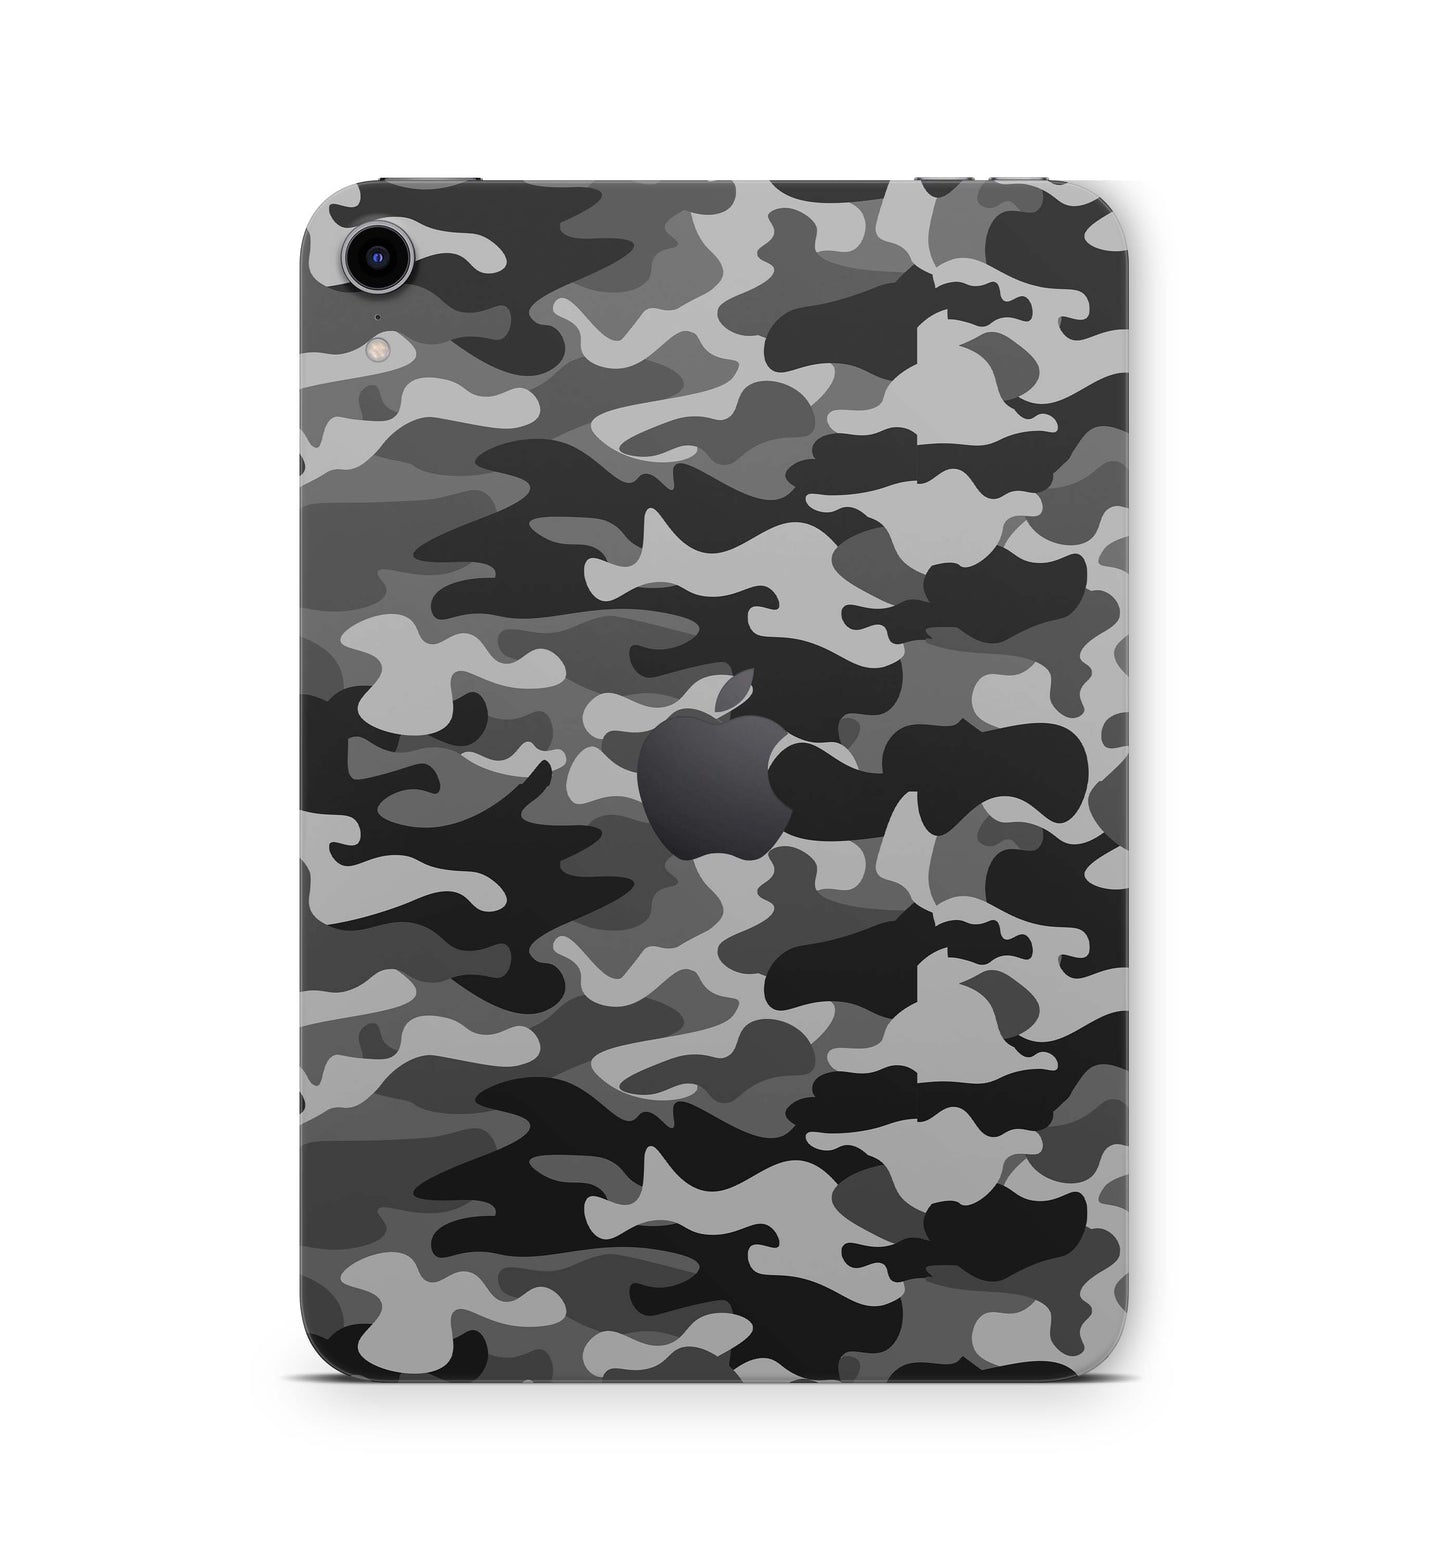 iPad Mini Skin Design Cover Folie Vinyl Skins & Wraps für alle iPad Mini Modelle Aufkleber Skins4u Urban-Camo  